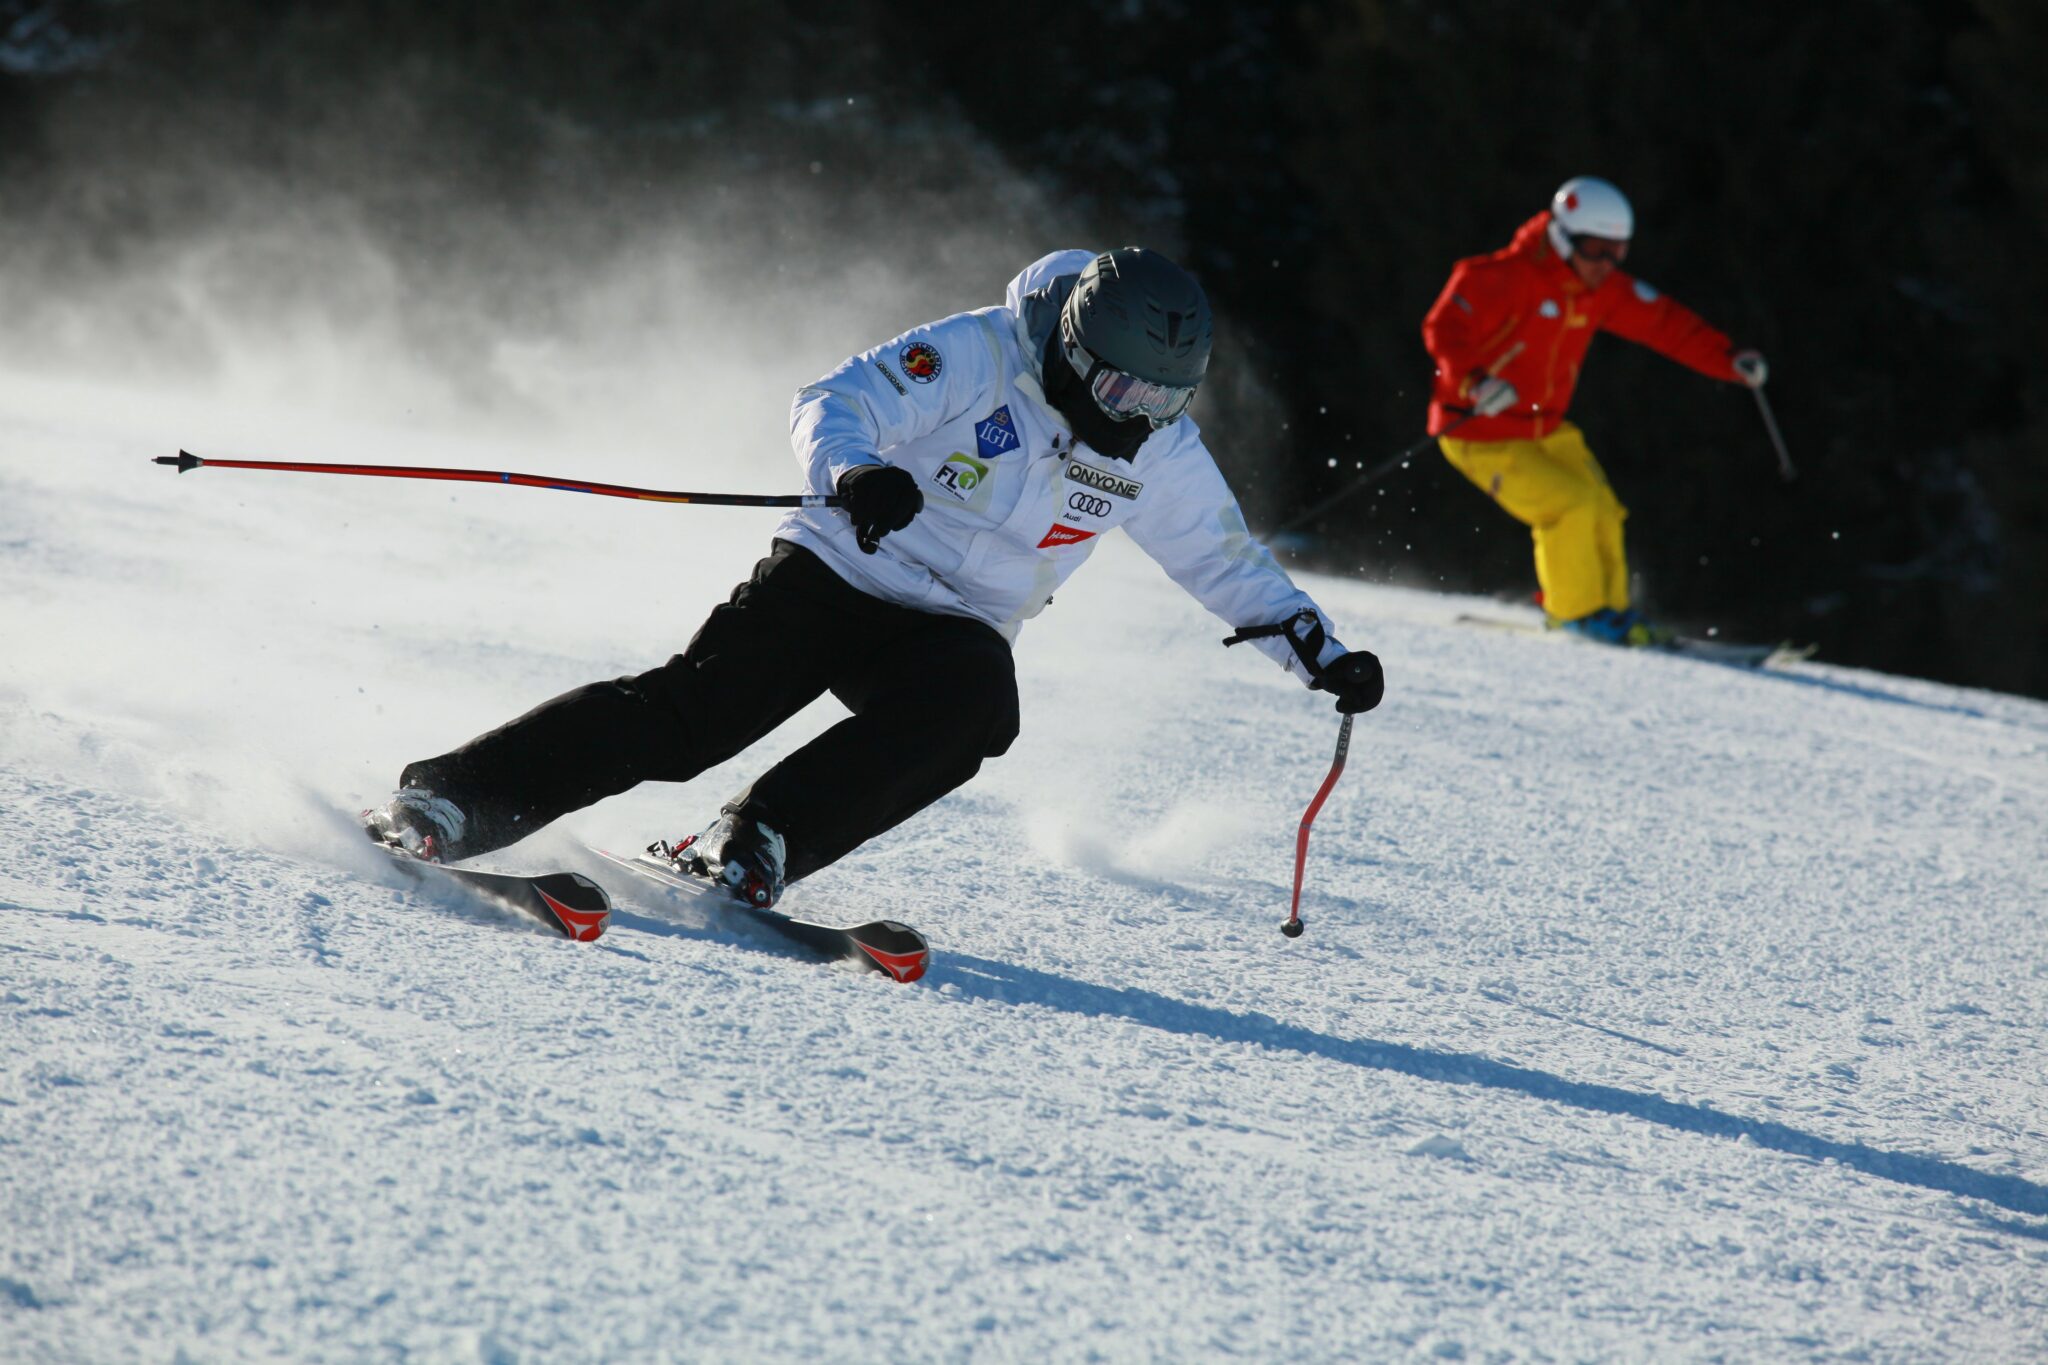 skiing life insurance